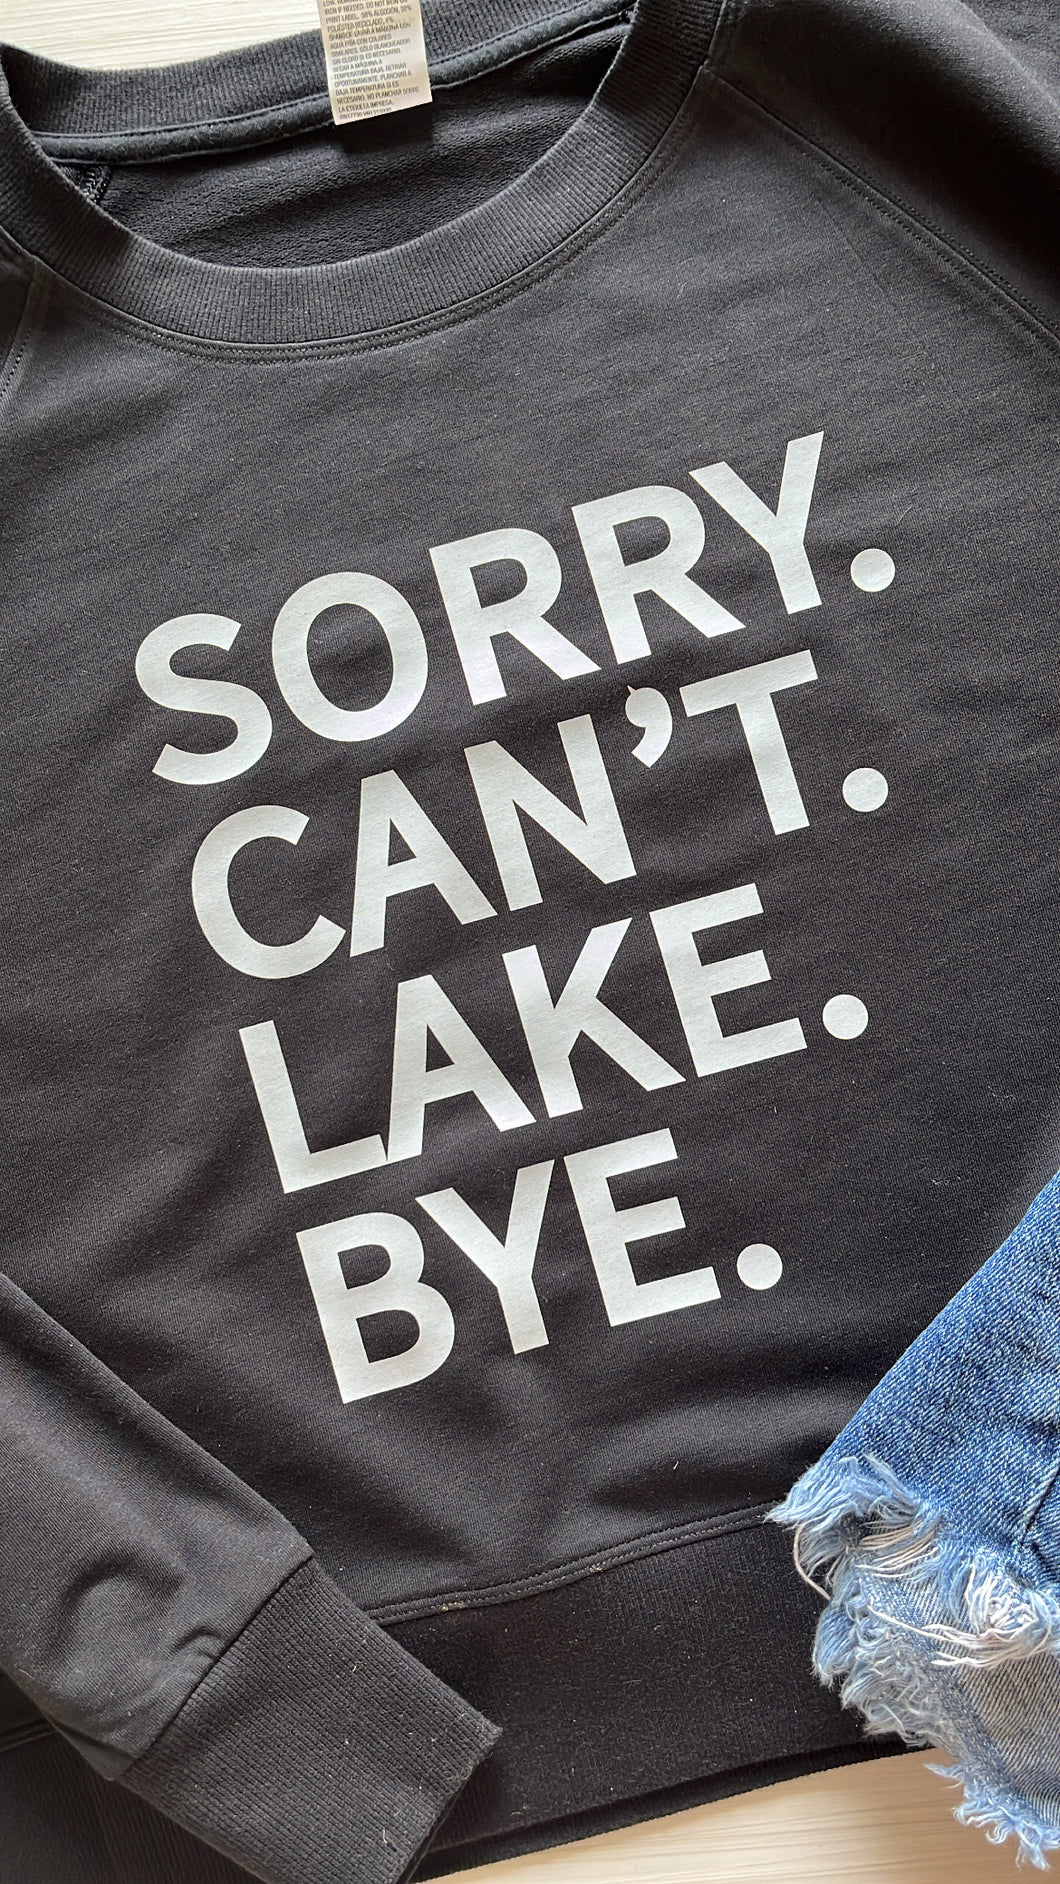 Sorry. Can't. Lake. Bye.